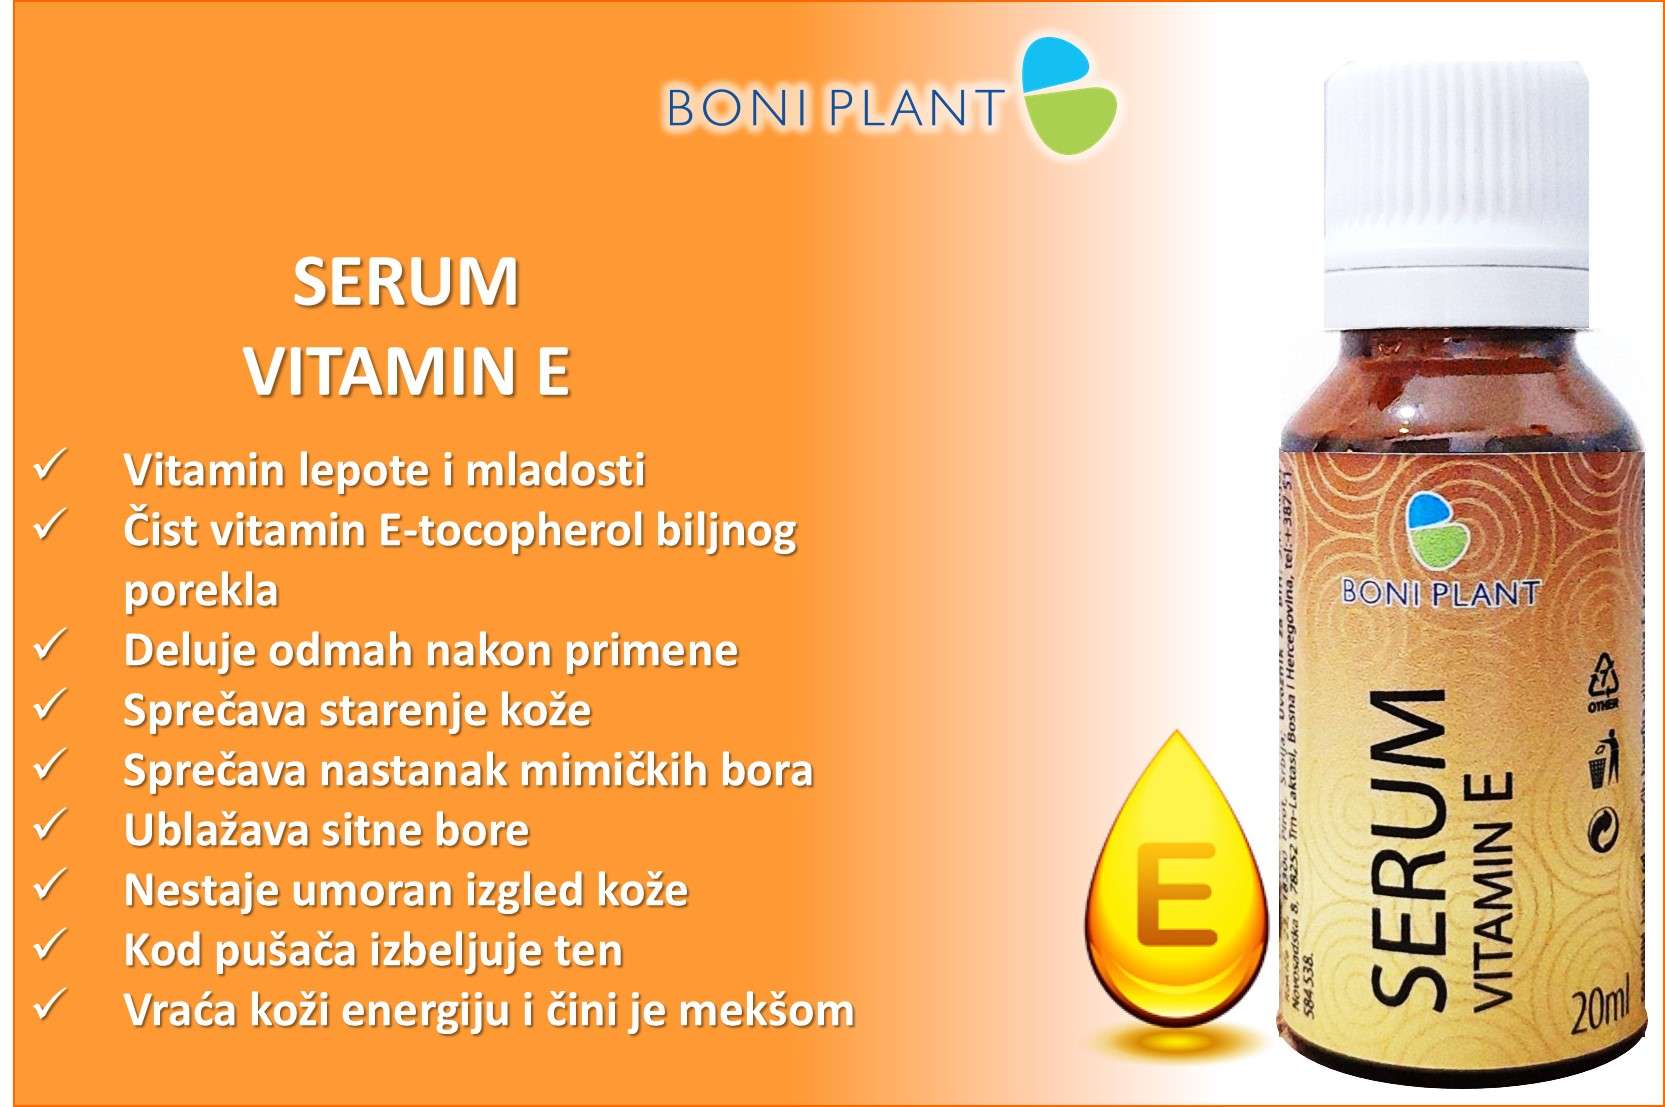 serum-vitamin-e-boniplant-prirodniproizvodi-negakoze-srbija-bosna